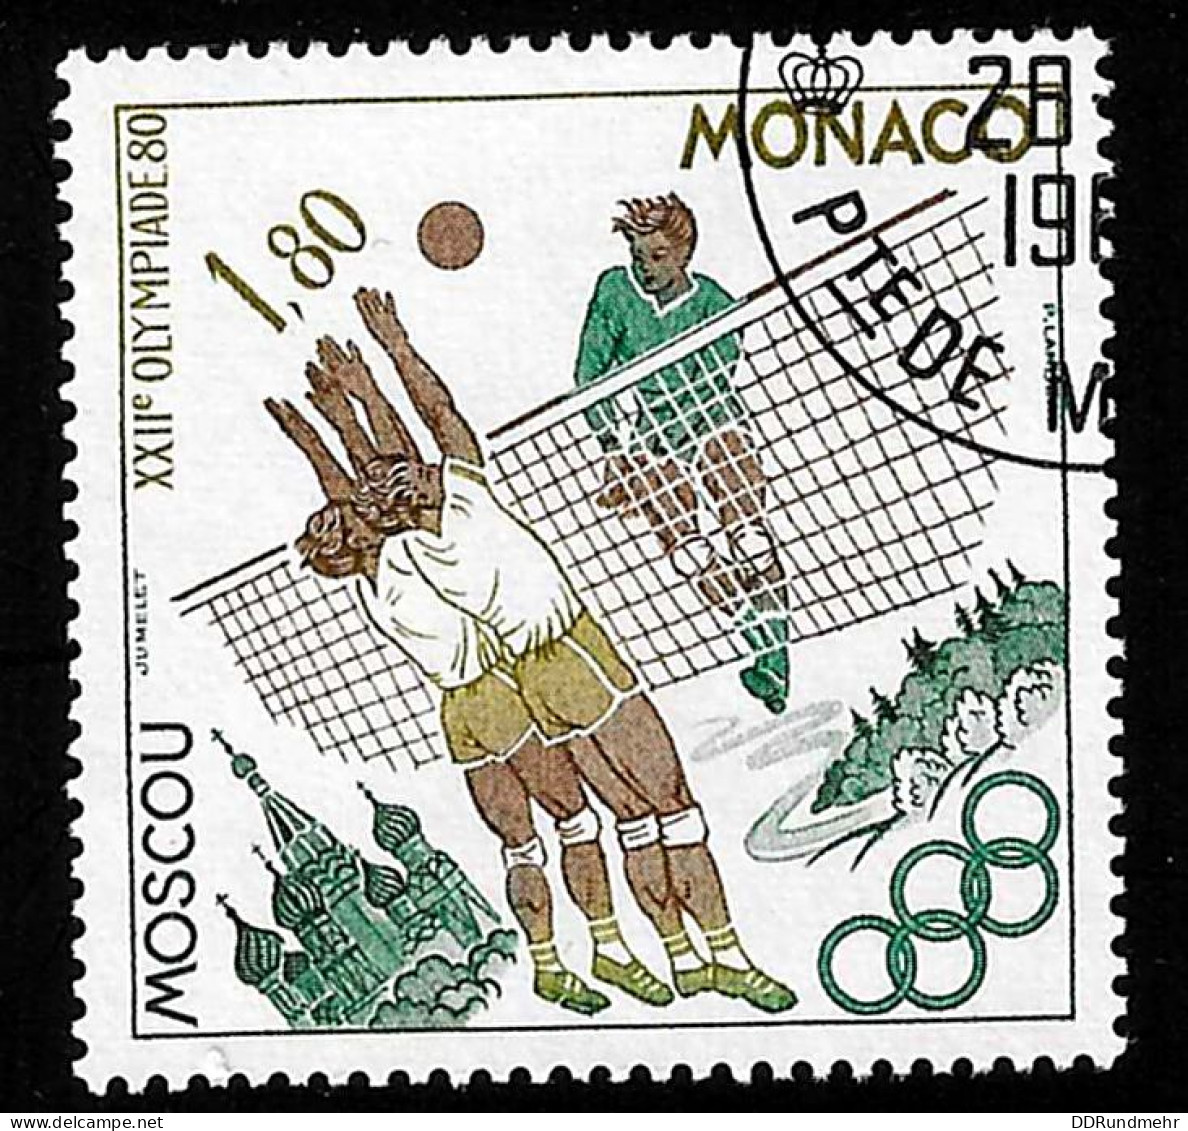 1980  Volleyball Michel MC 1418 Stamp Number MC 1224 Yvert Et Tellier MC 1221 Stanley Gibbons MC 1438 Used - Gebruikt